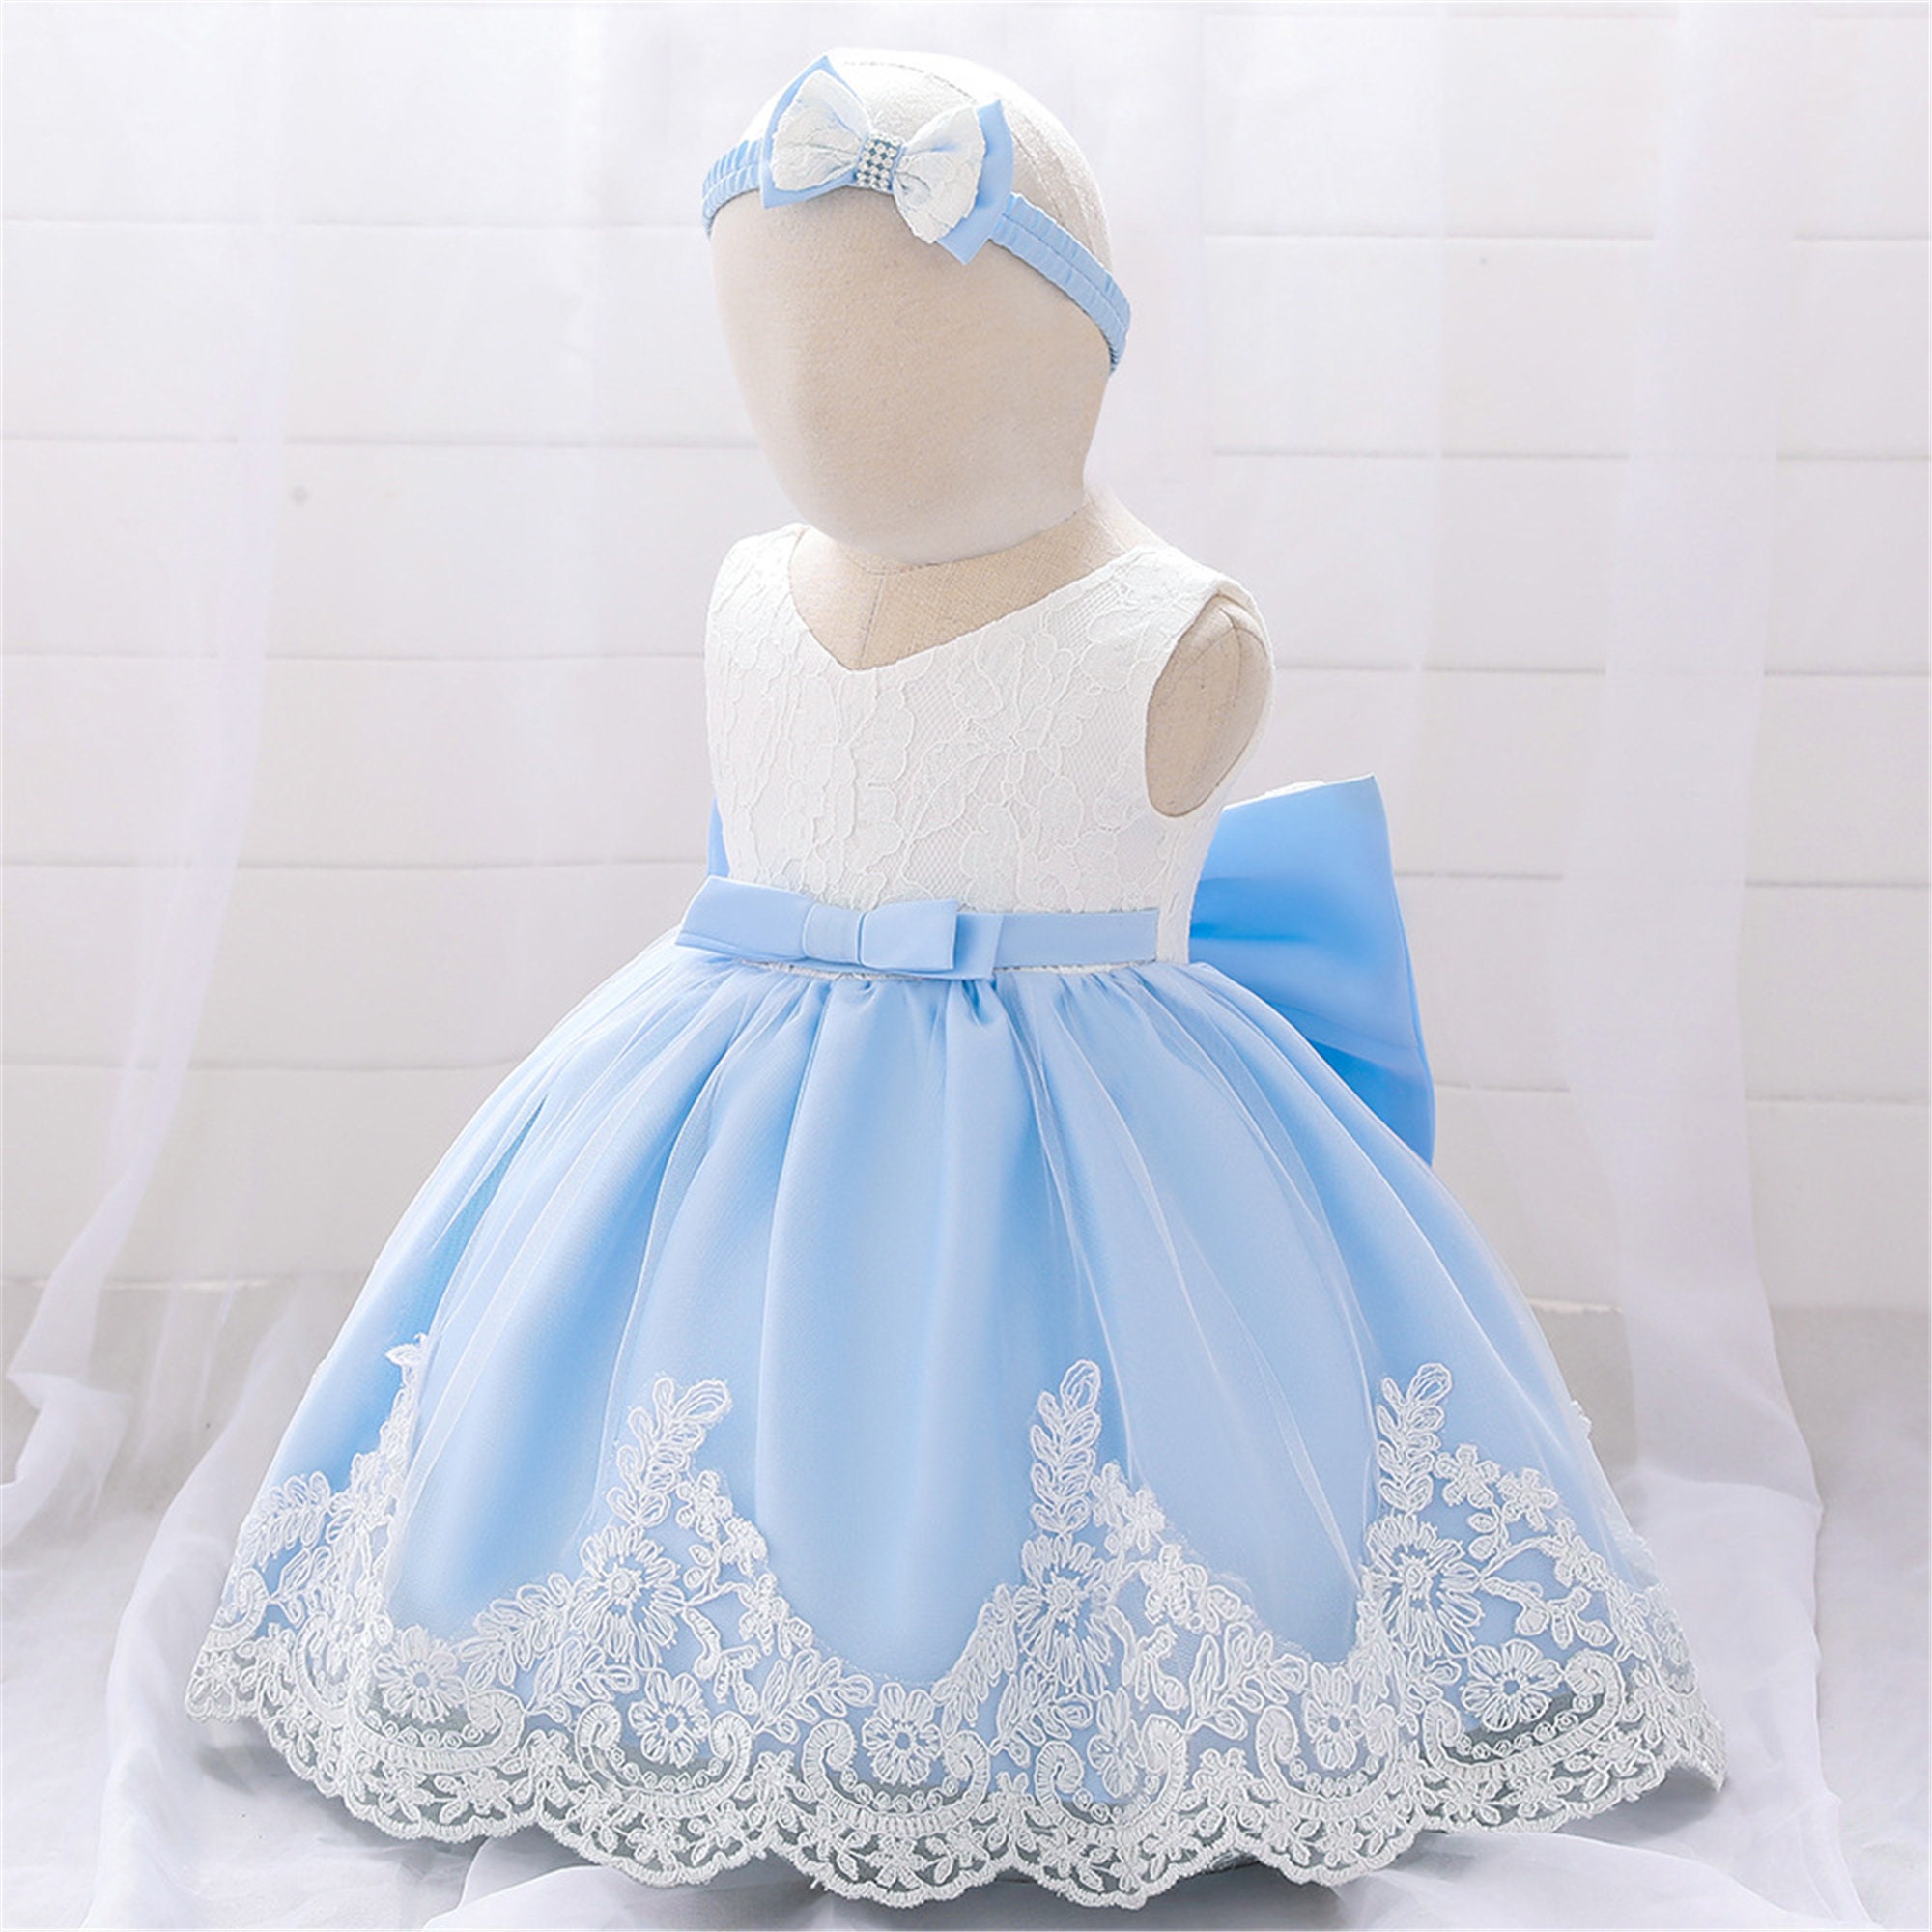 Blue flower girl dress Sleeveless tutu dress High-quality | Etsy